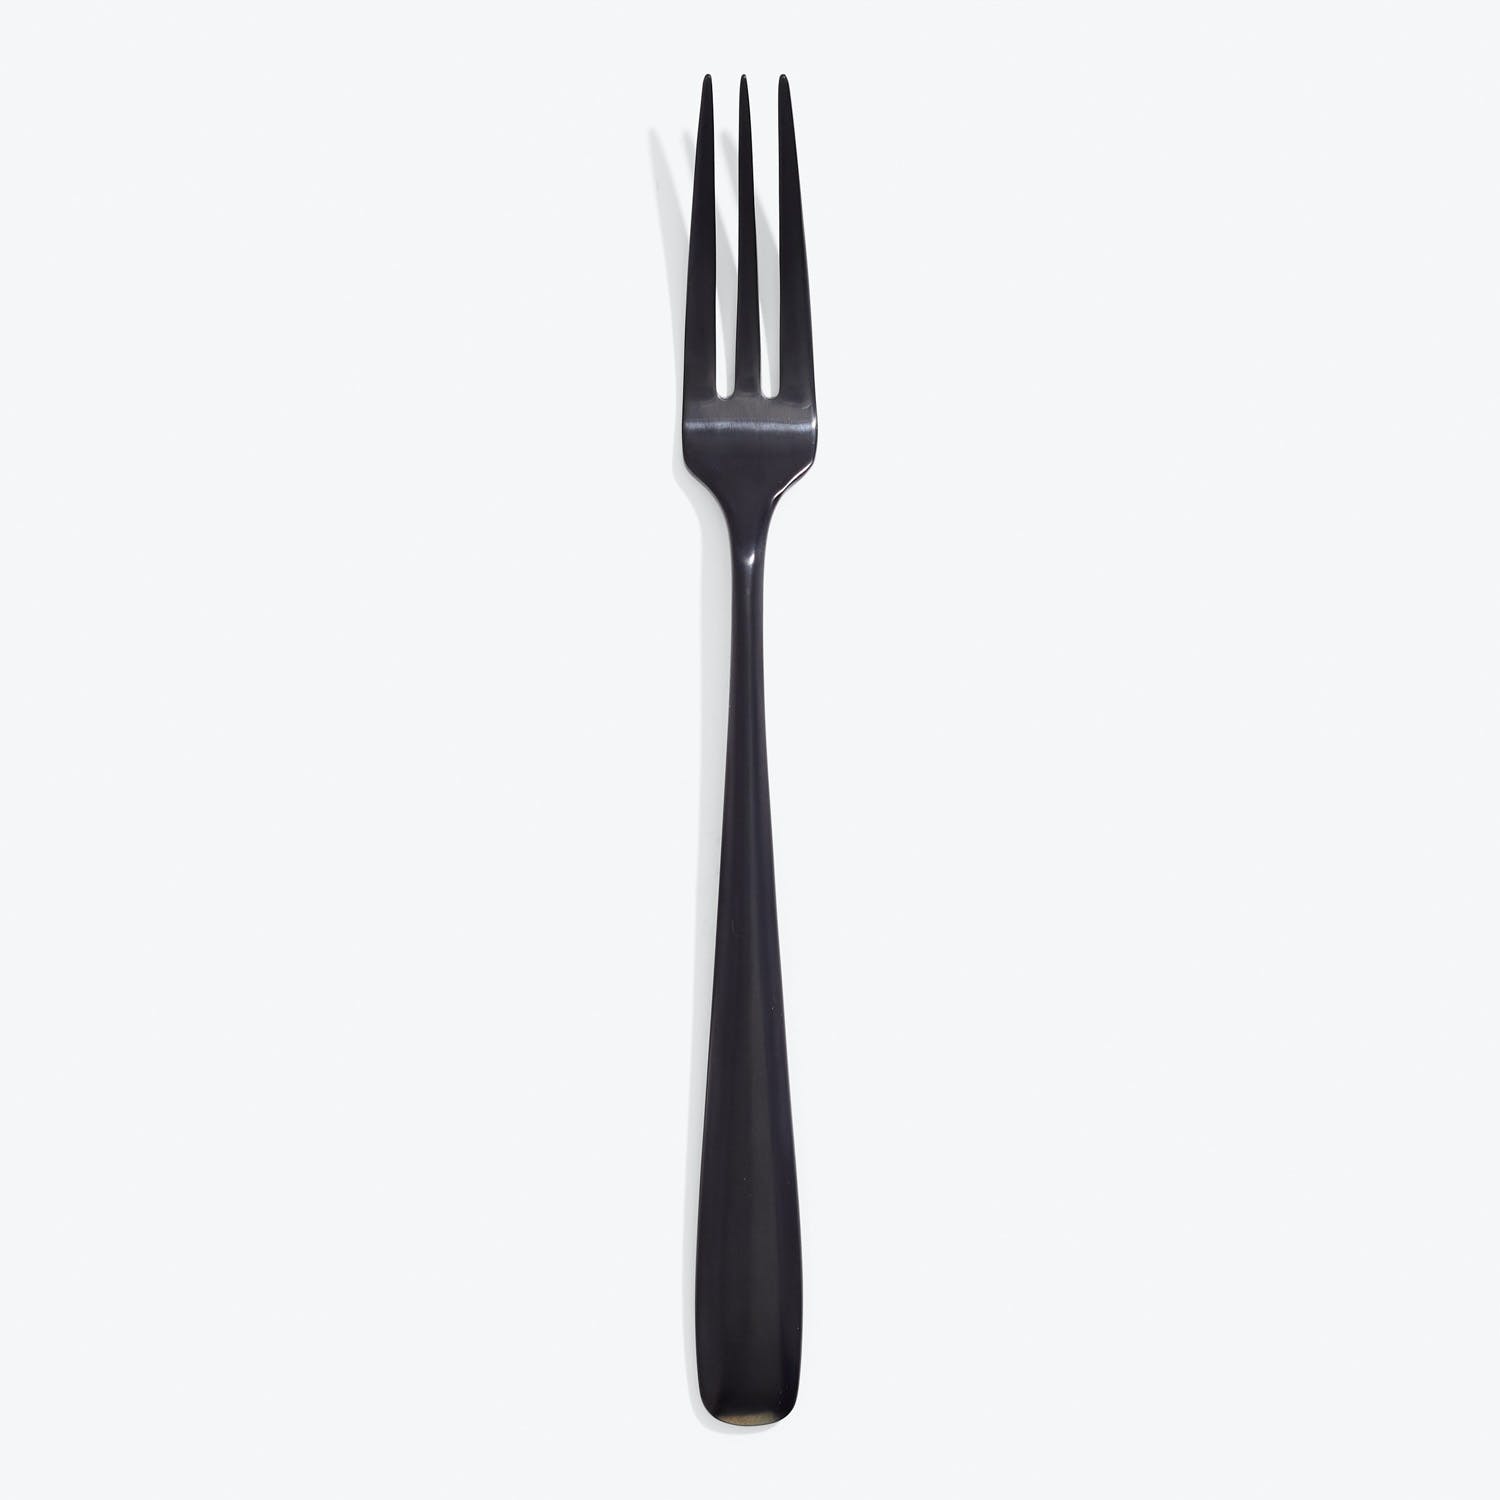 A minimalist, sleek black fork with four tines on white.